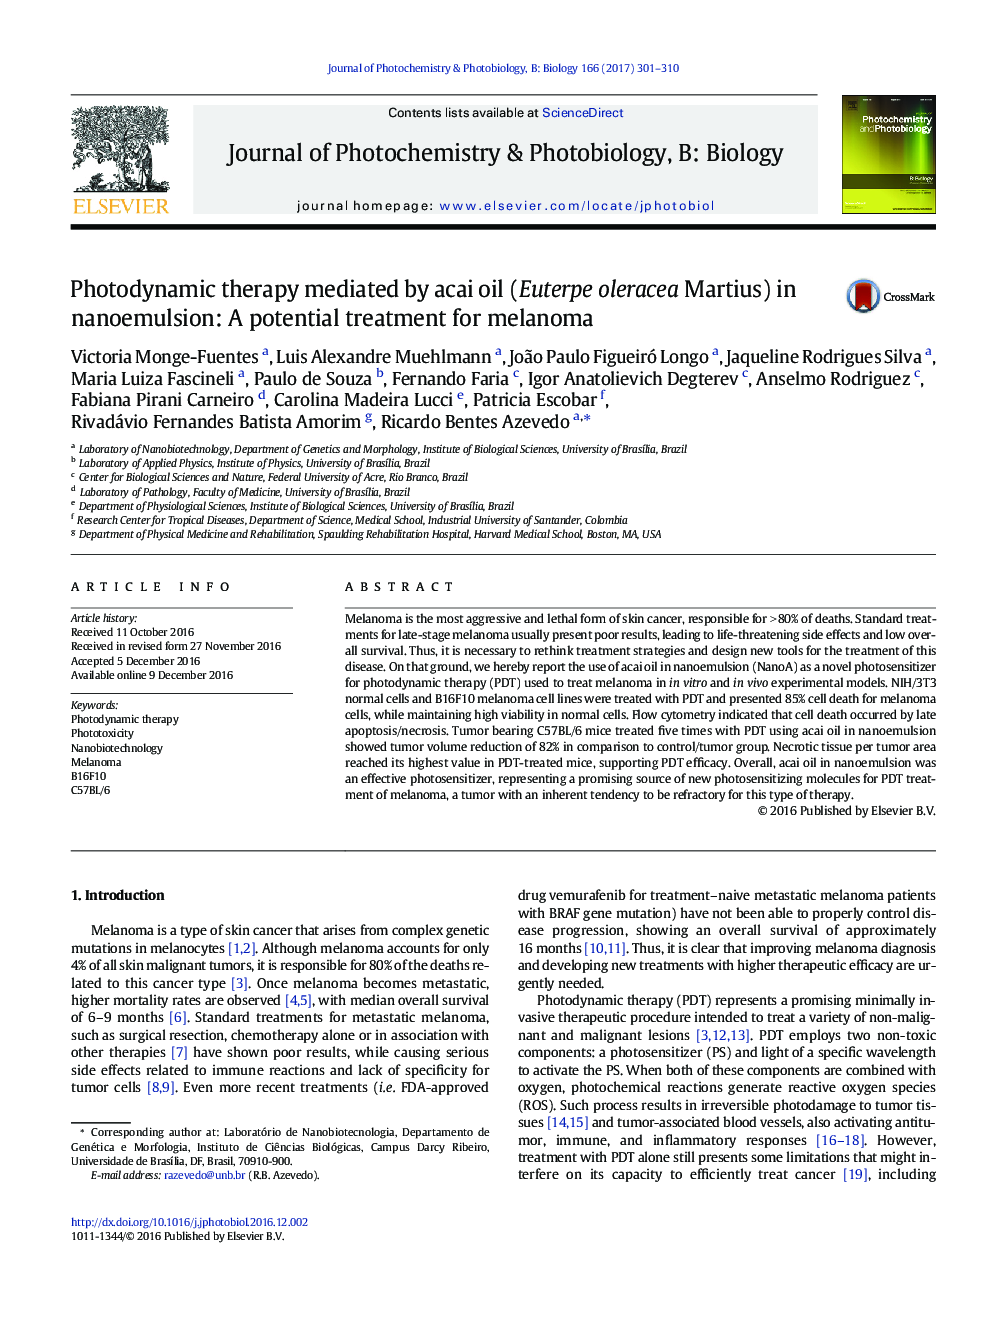 Photodynamic therapy mediated by acai oil (Euterpe oleracea Martius) in nanoemulsion: A potential treatment for melanoma